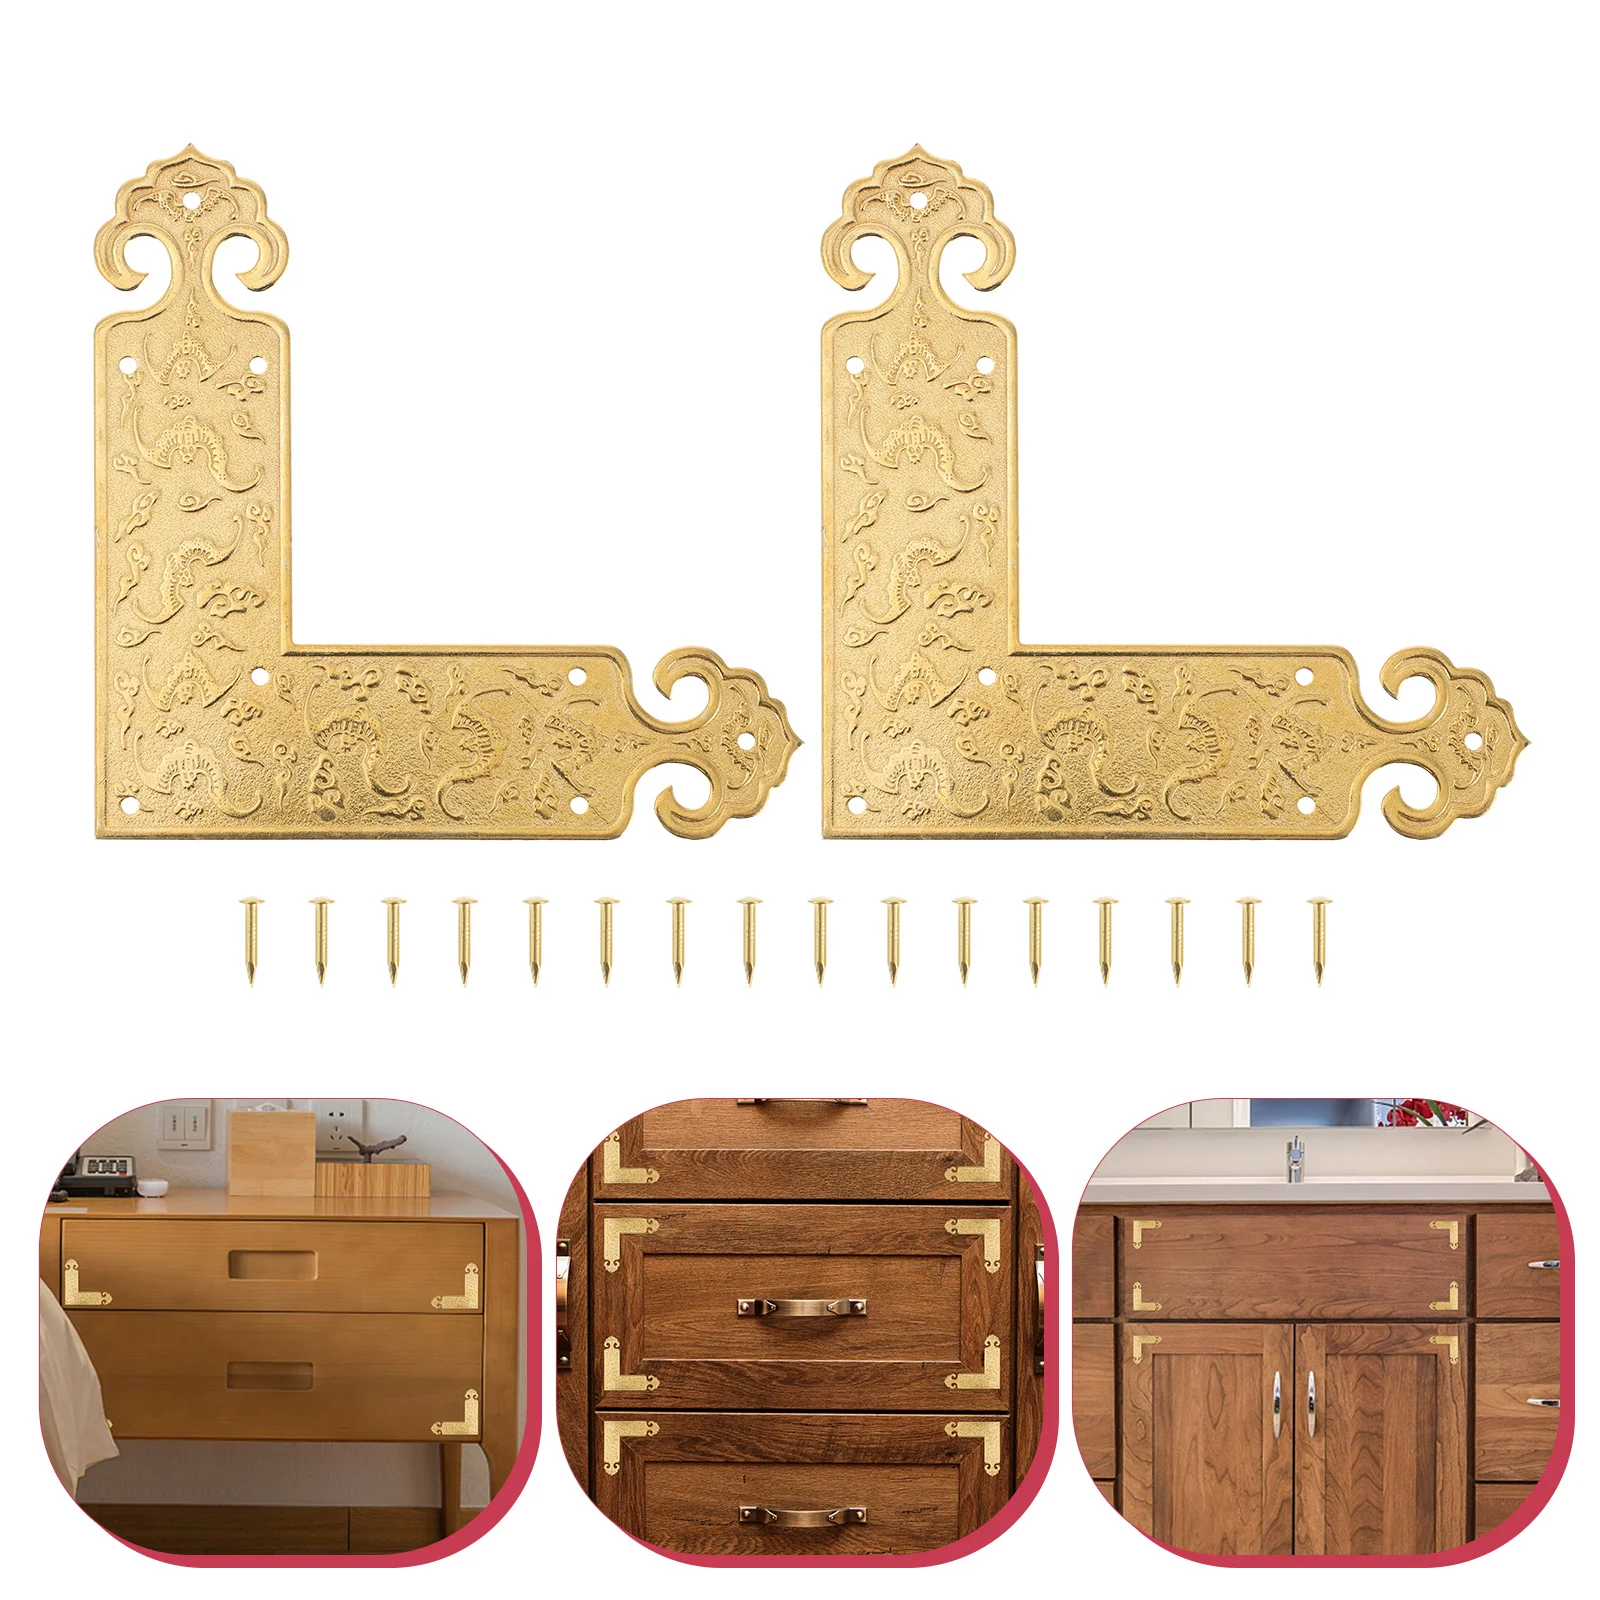 

2Pcs Corner Brass Bracket Corner Metal Joint Right Angle Brackets Fastener with Screws for Furniture Wood Cabinets Shelves